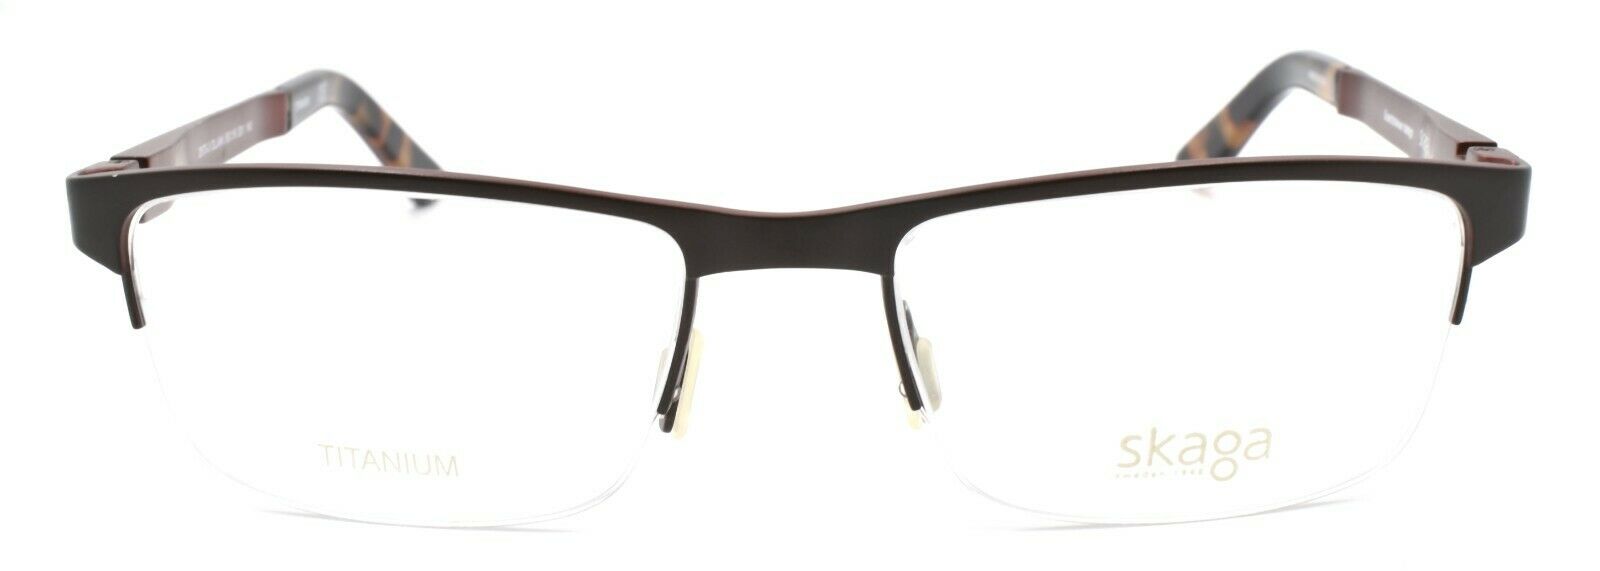 2-Skaga 2573-U Oljan 201 Men's Glasses Frames Half Rim TITANIUM 55-19-140 Brown-IKSpecs